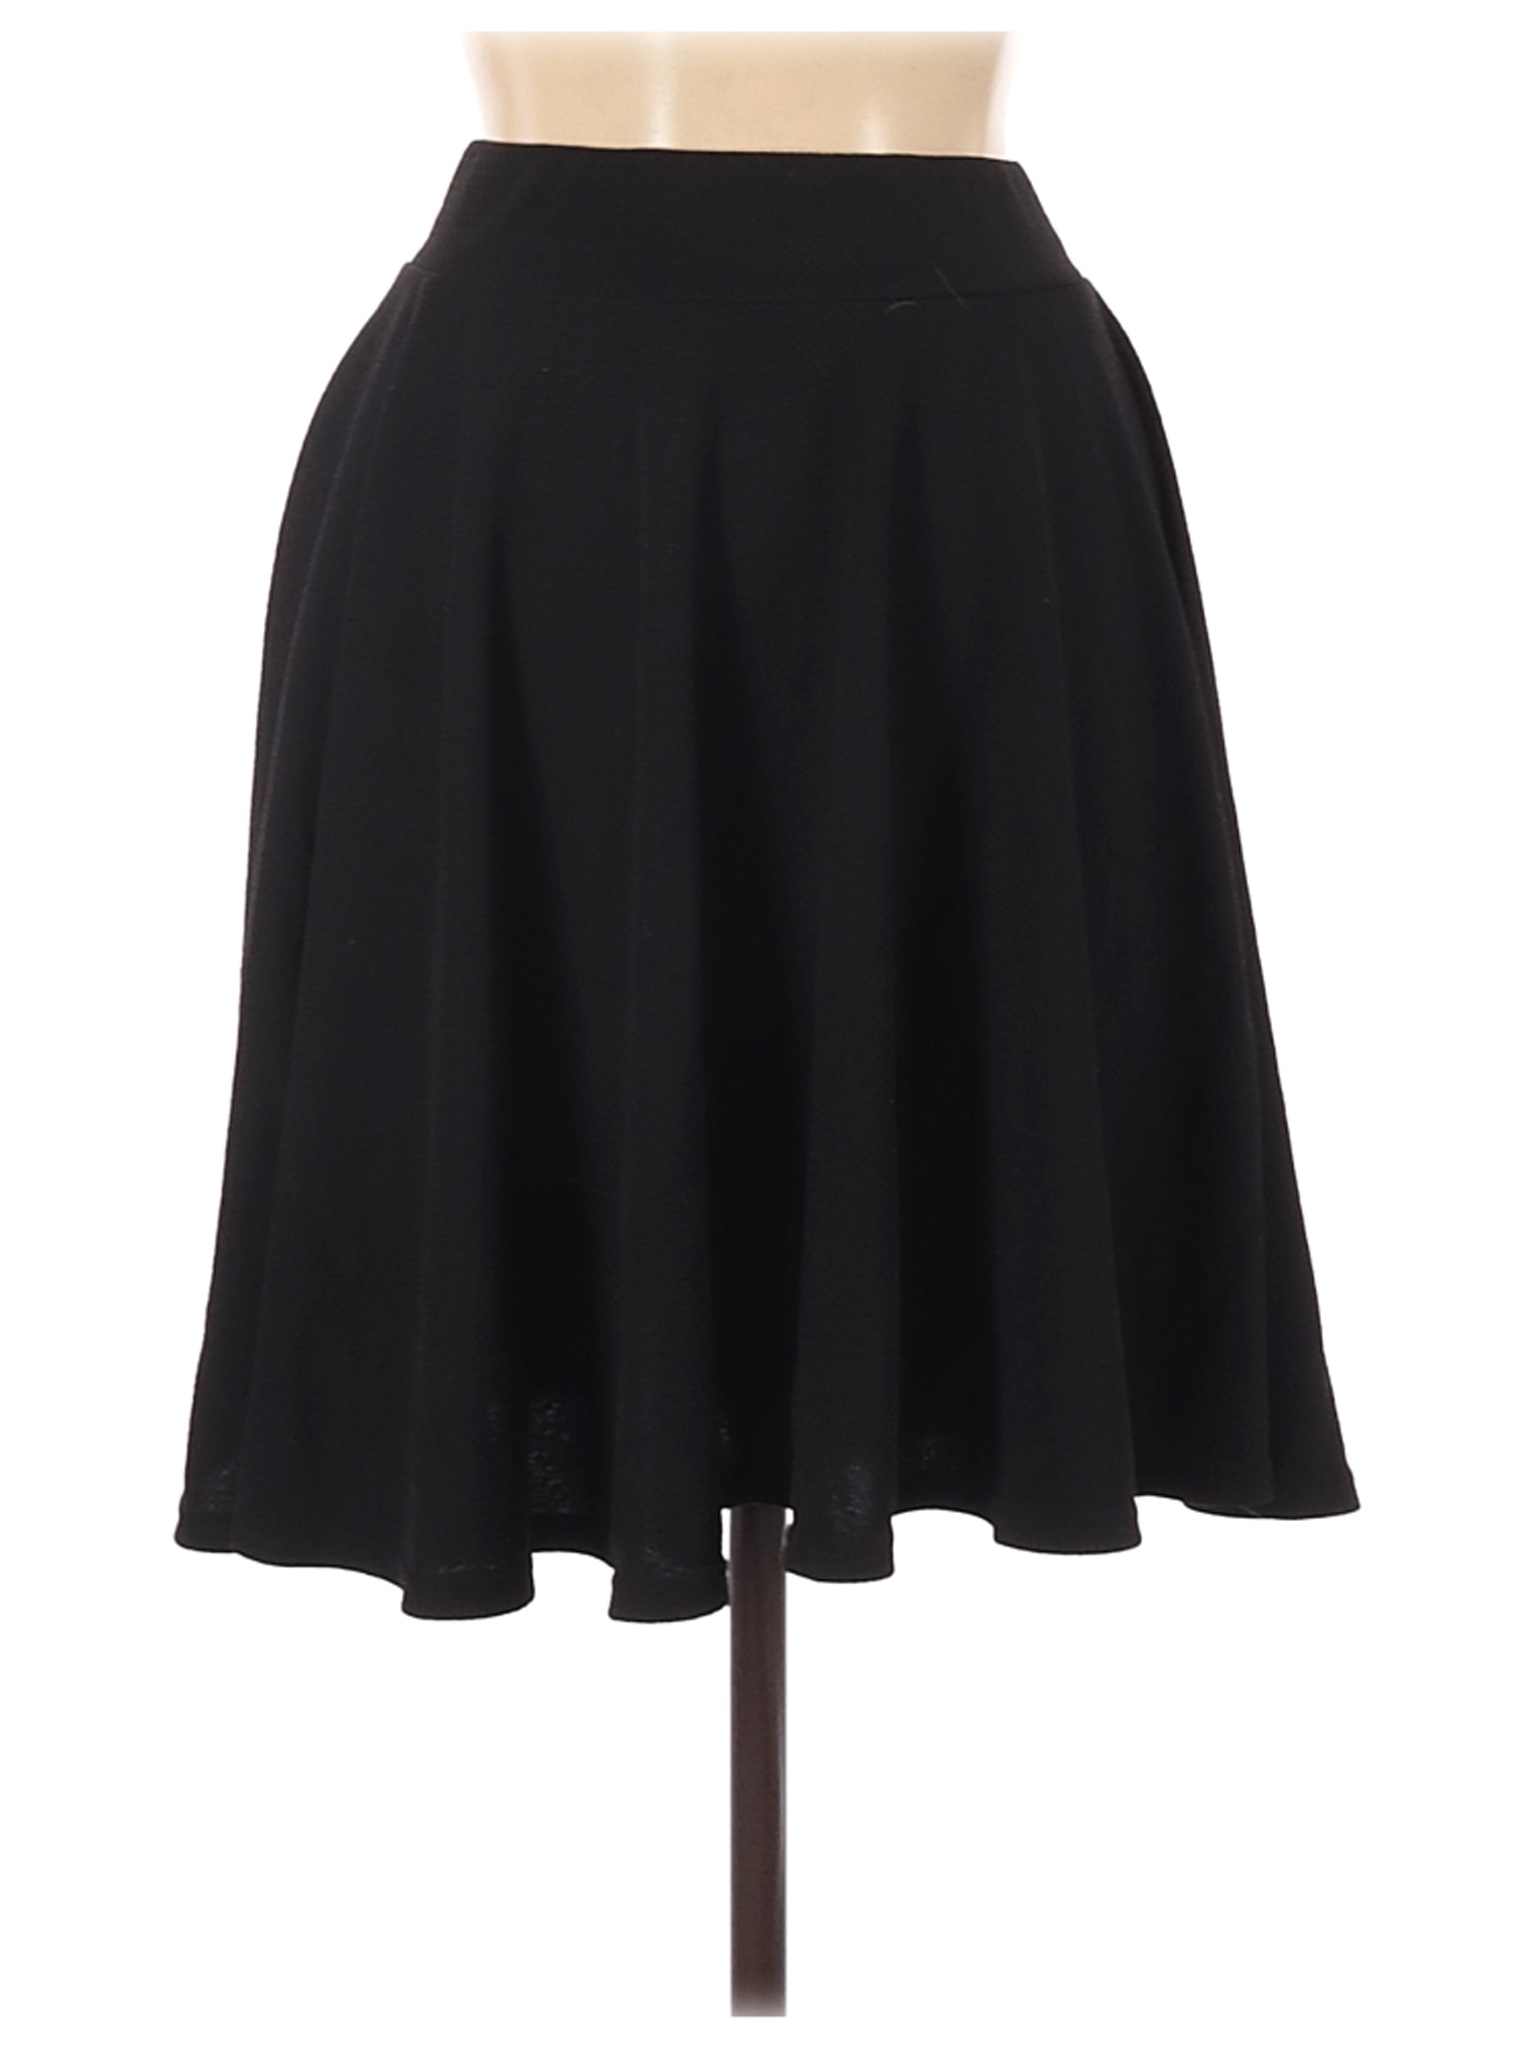 Urban Coco Women Black Casual Skirt M | eBay